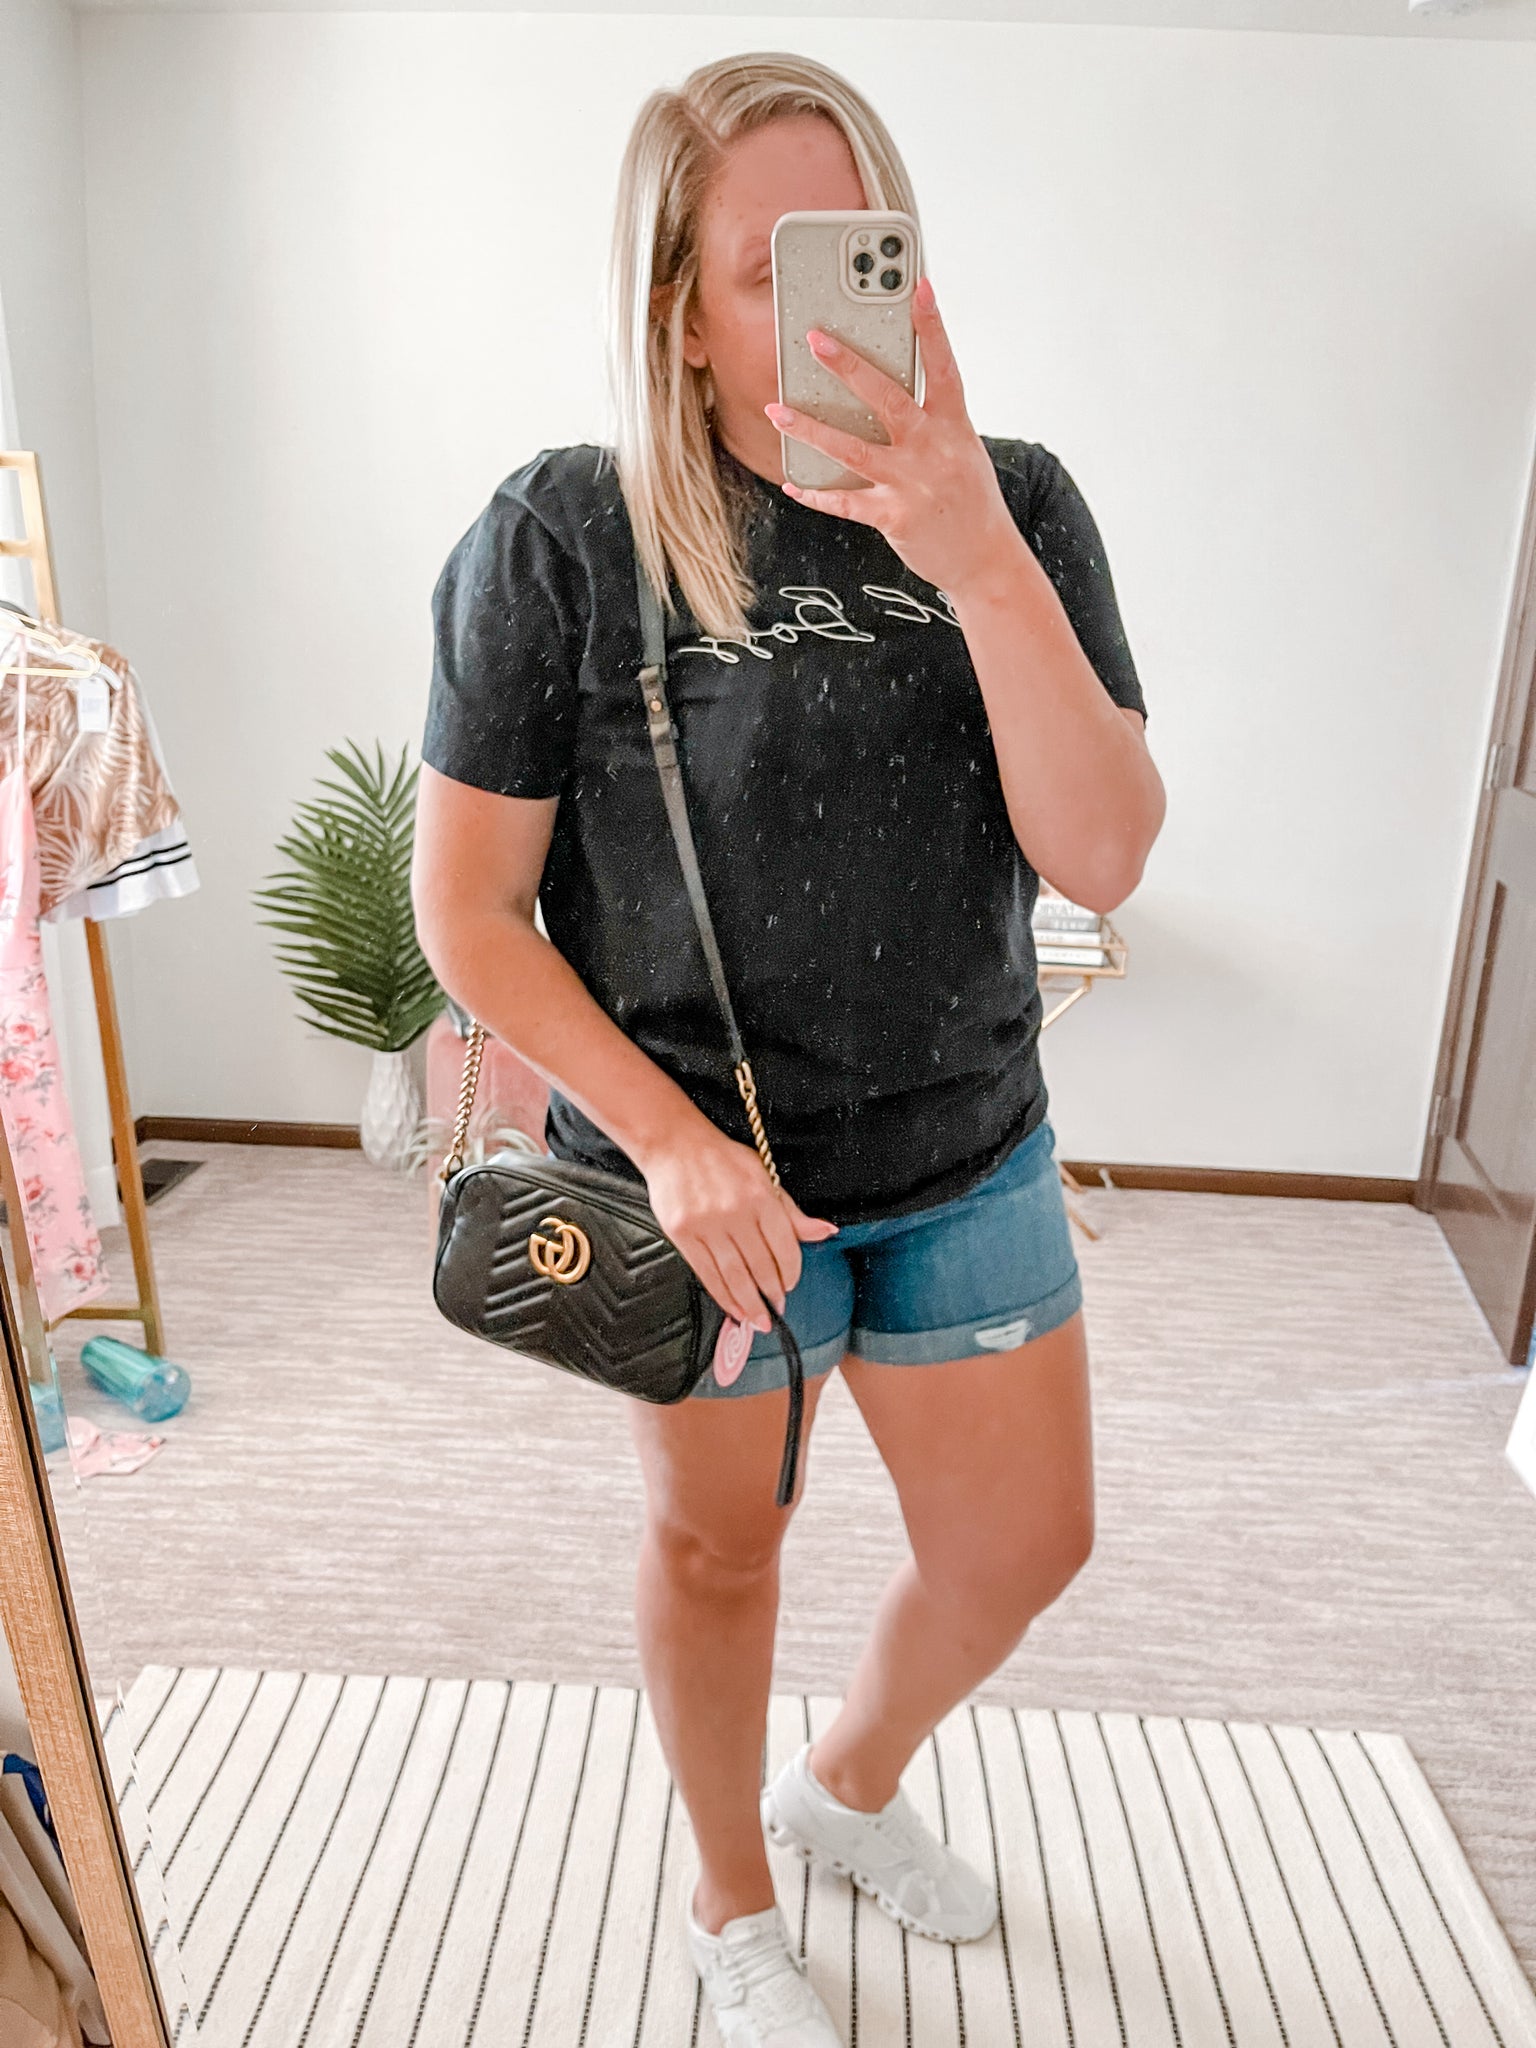 Gucci Marmont Matlasse Small Shoulder Bag Black – DAC